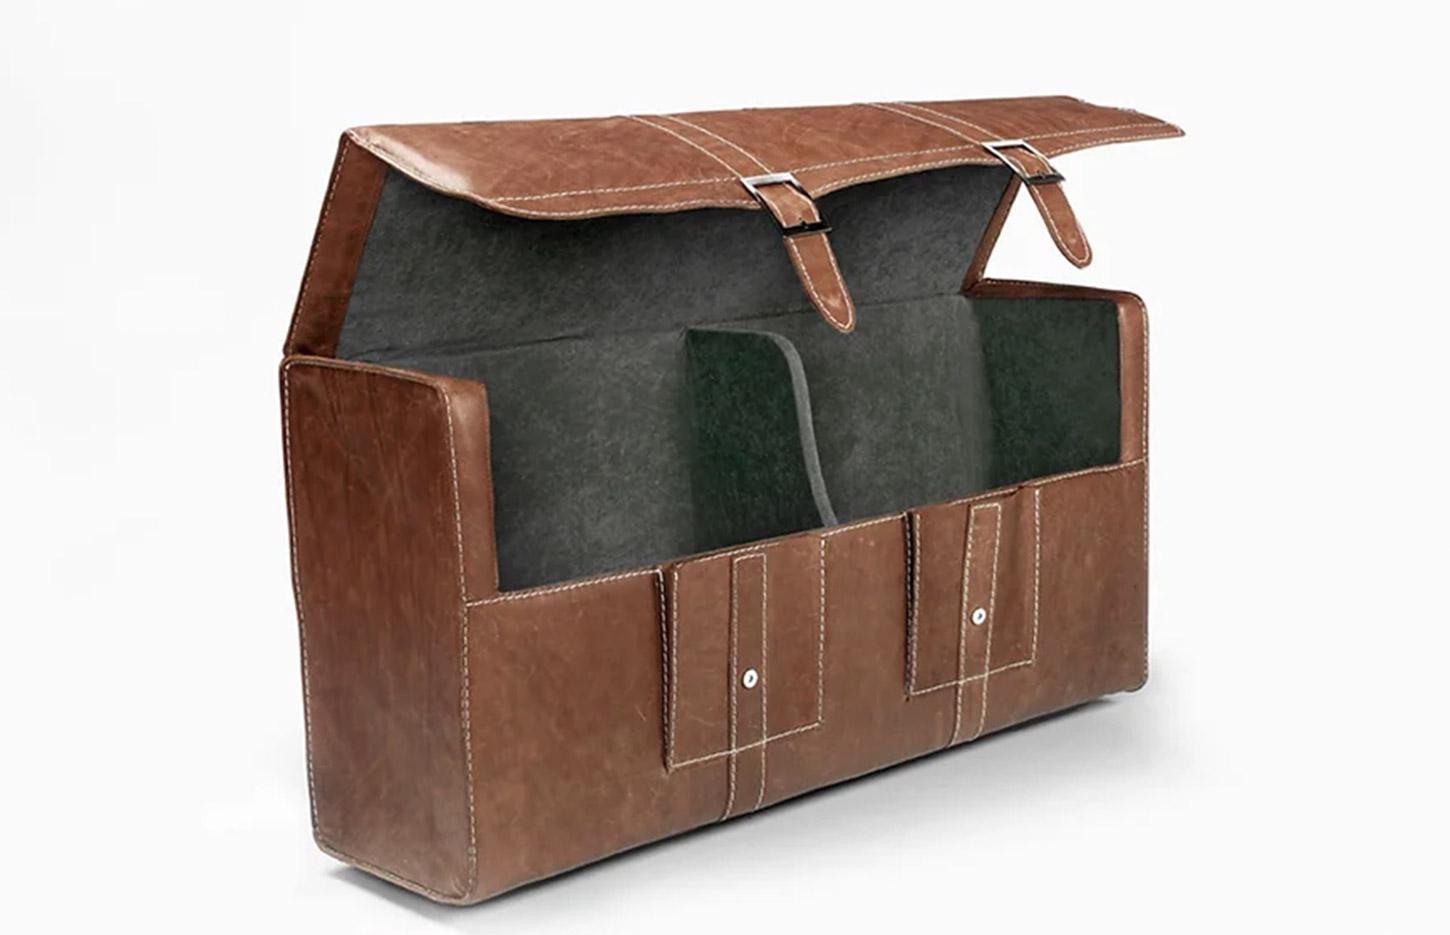 Canapé confortable en tissu avec malle en cuir, gamme Izoard - France Bureau